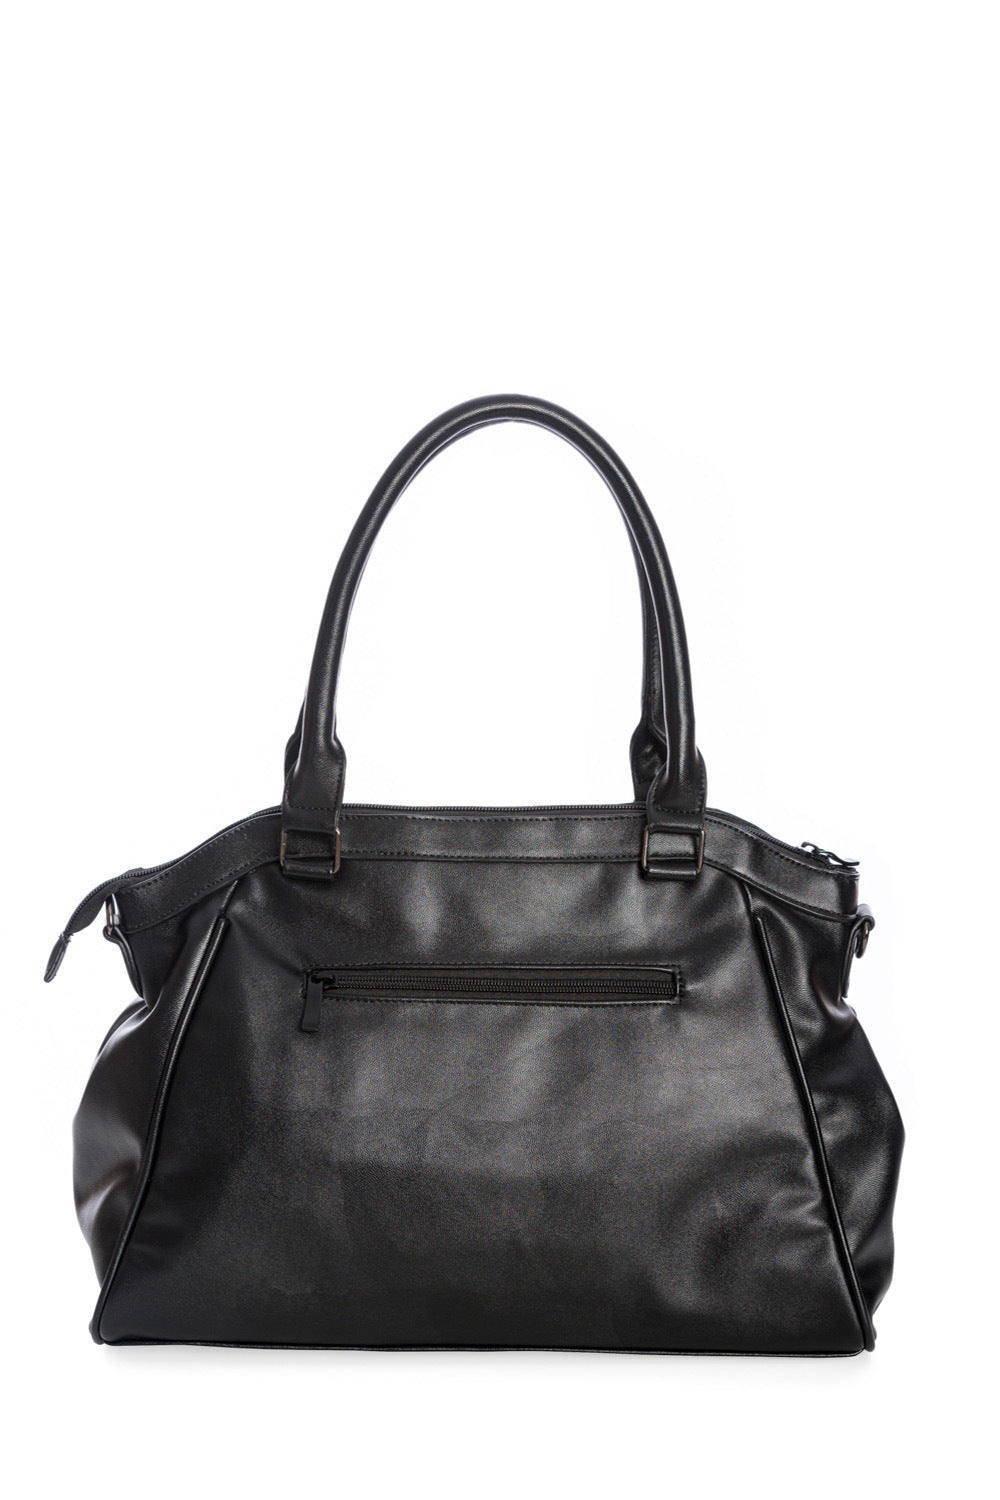 Banned Alternative Sabrina Handbag